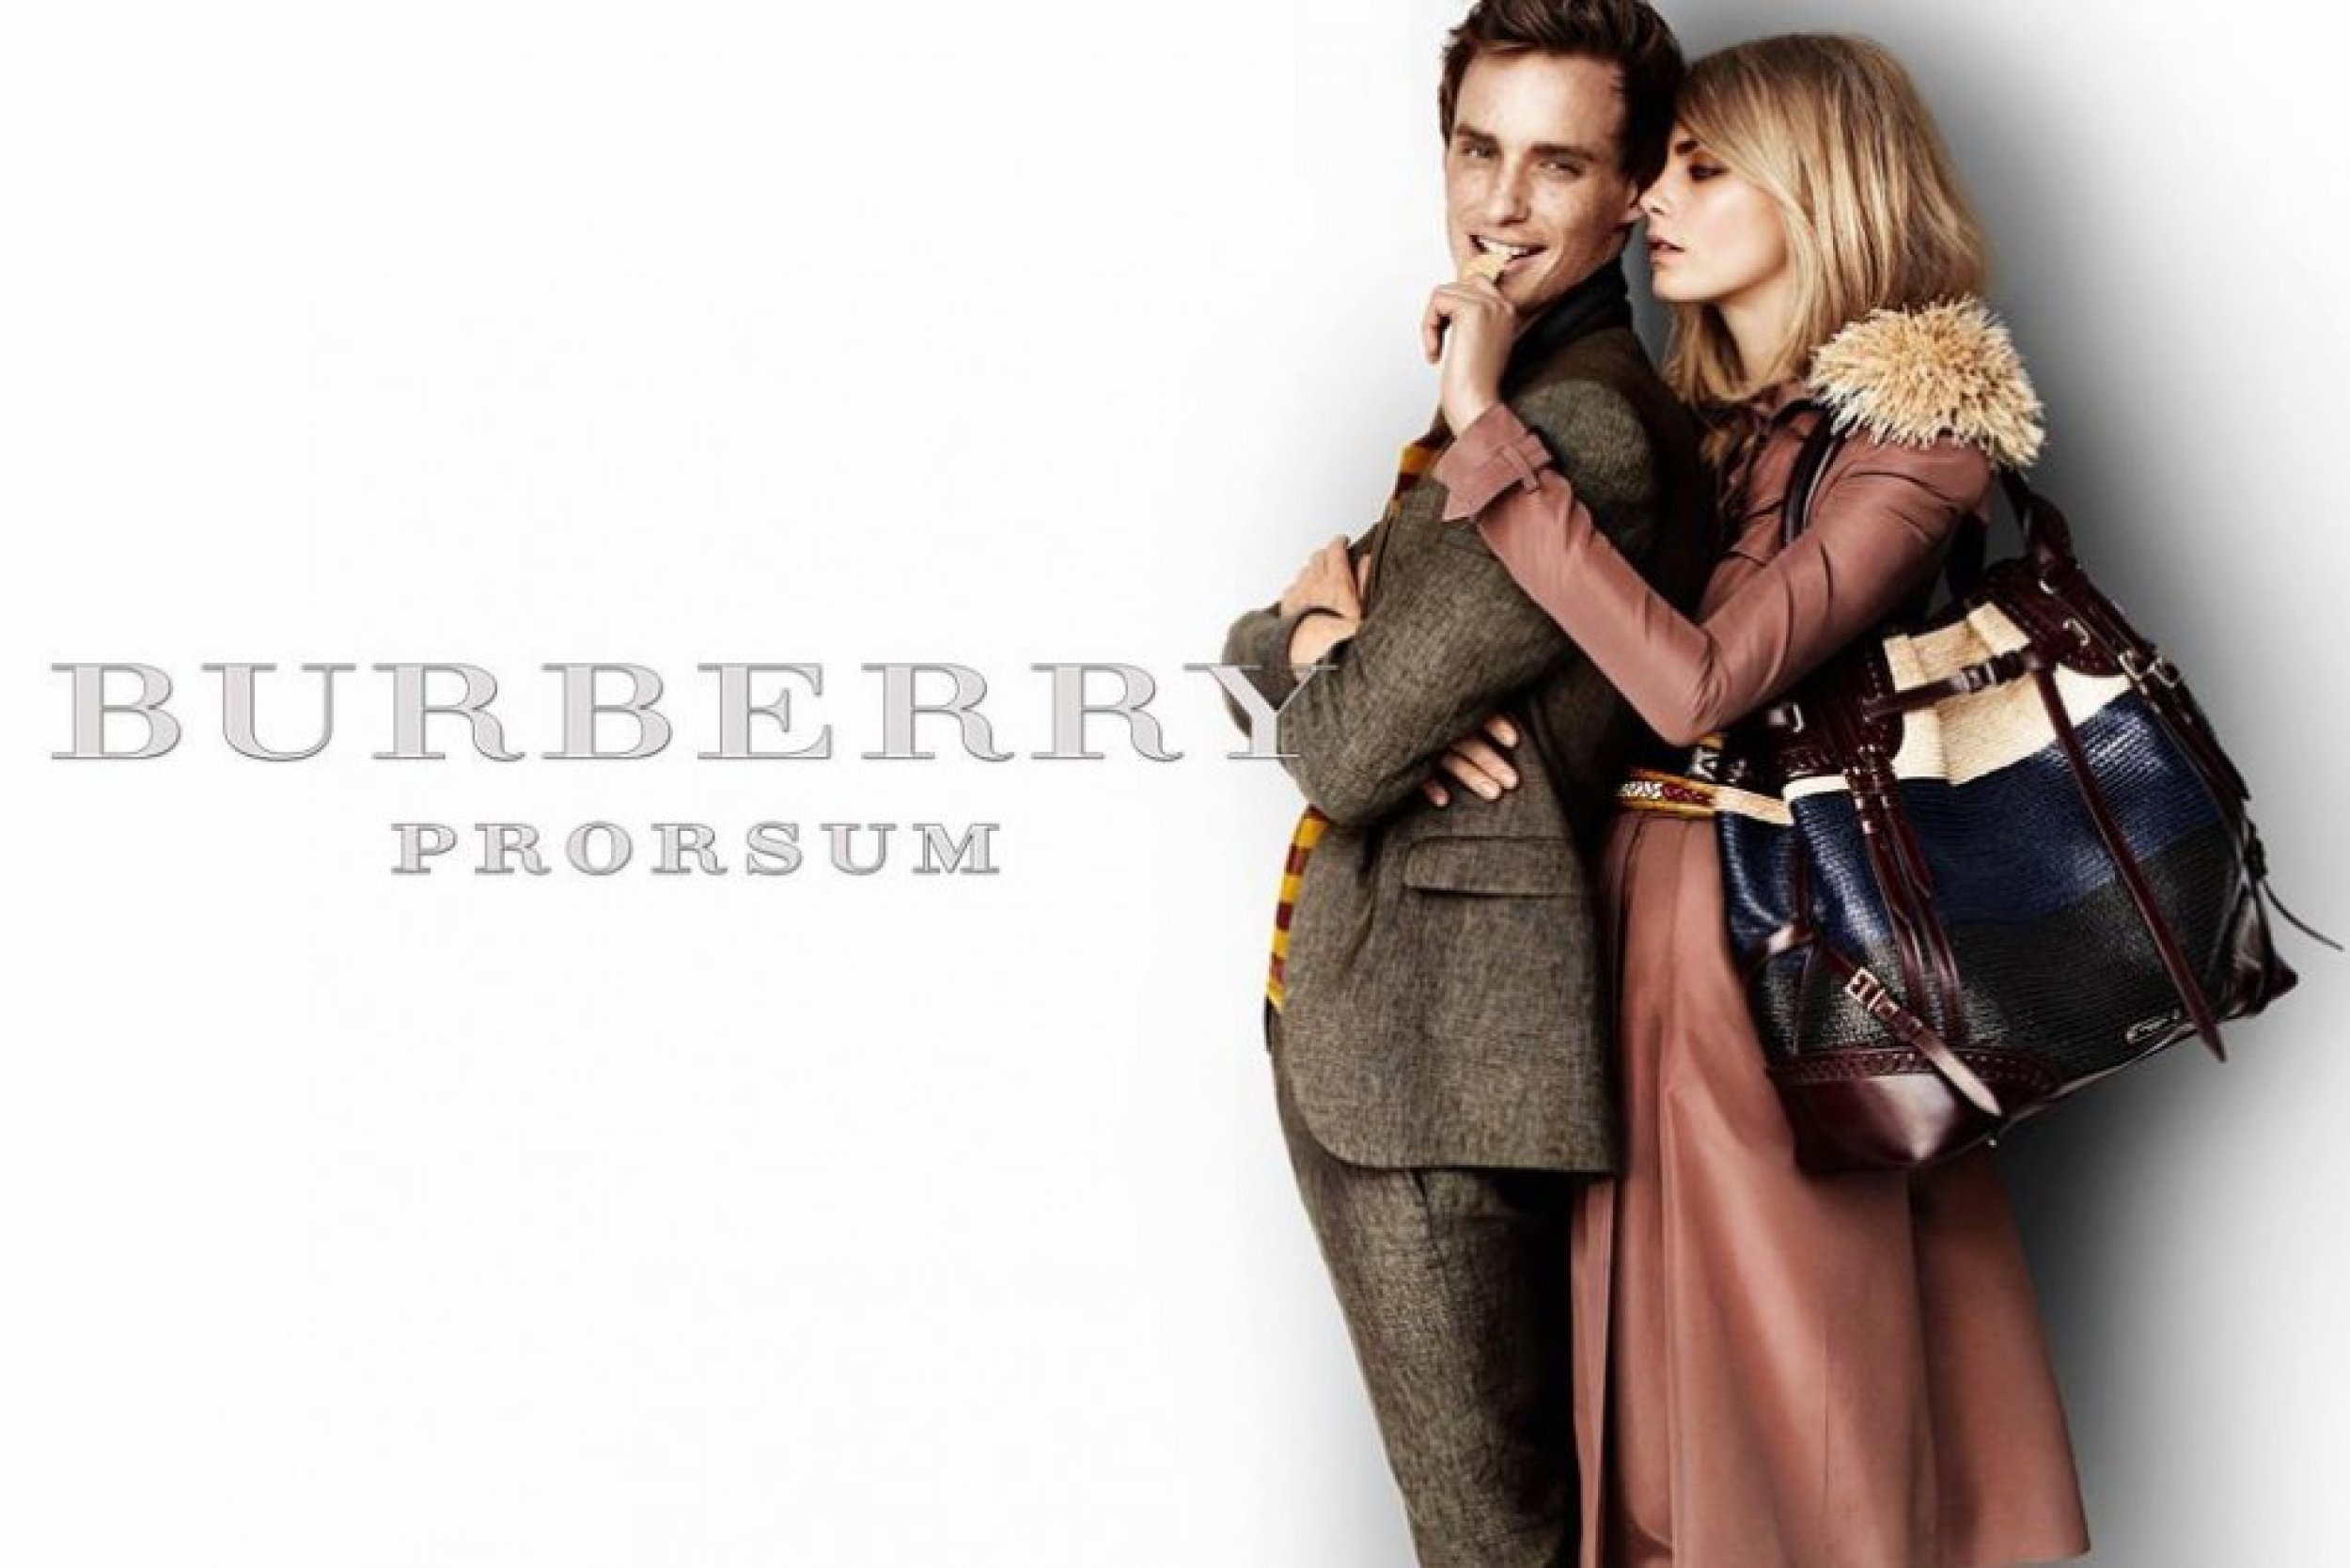 Burberry Beats Dior as Facebooks Top Fashion Brand 